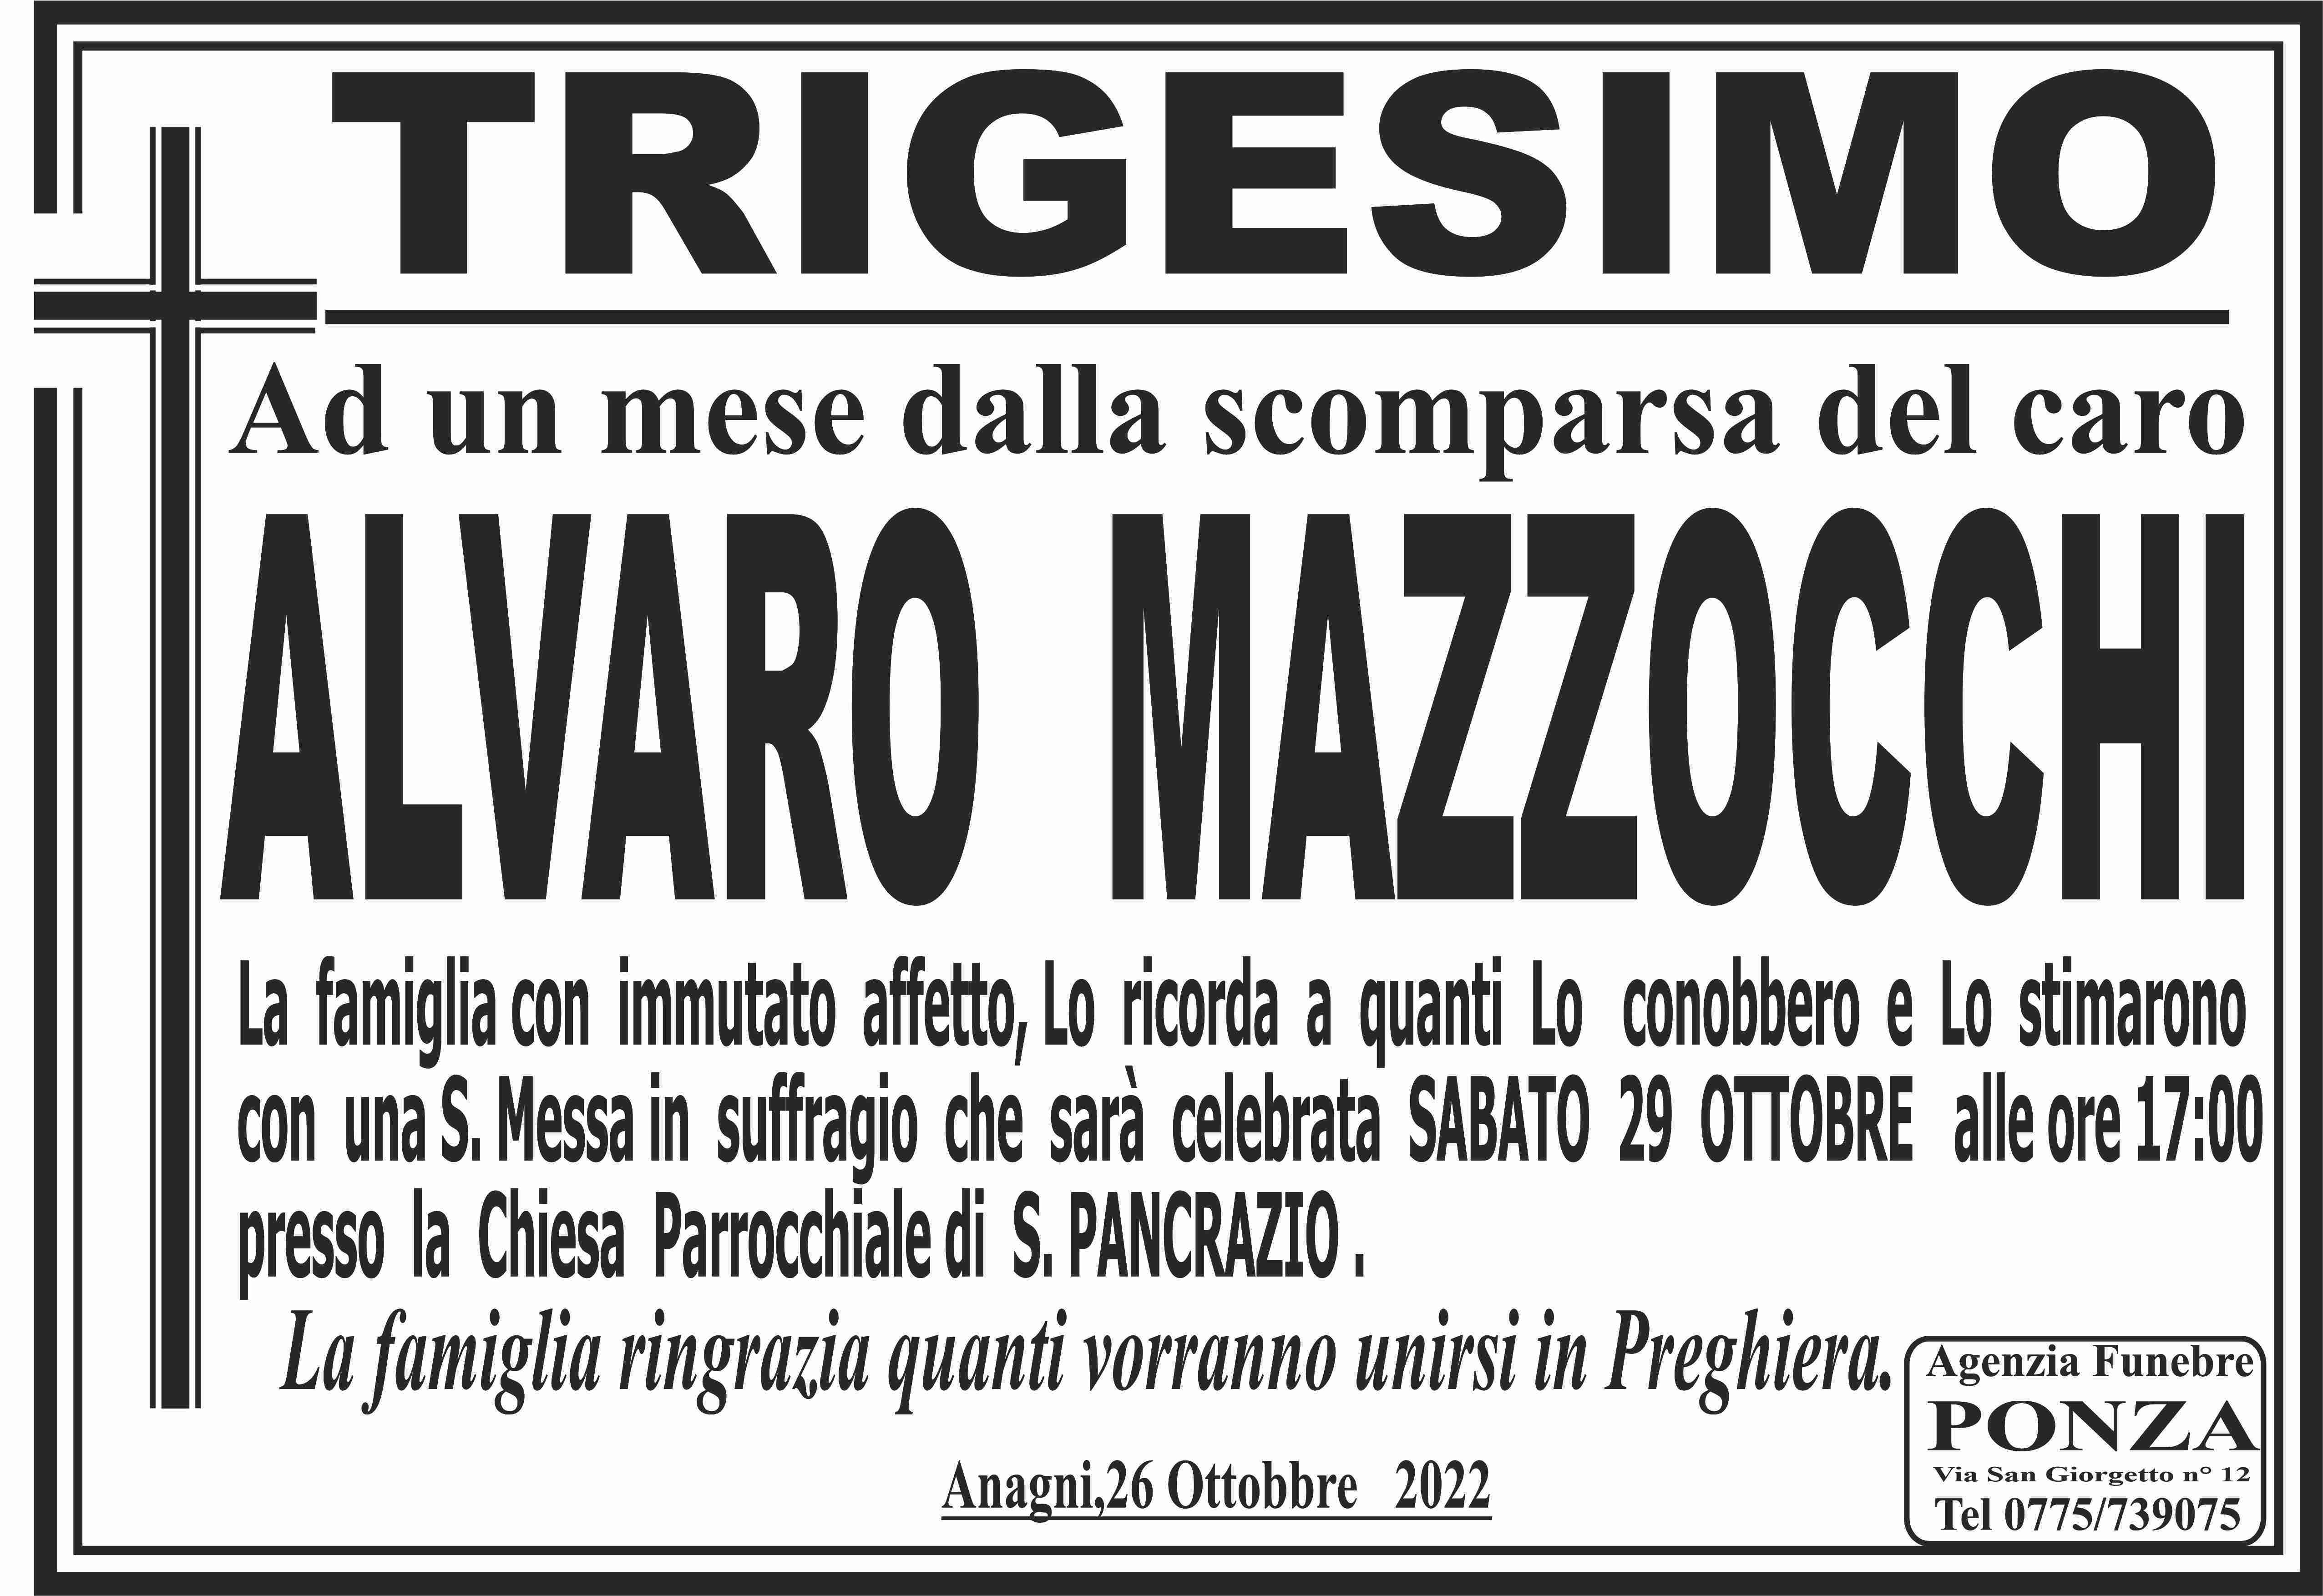 Alvaro Mazzocchi